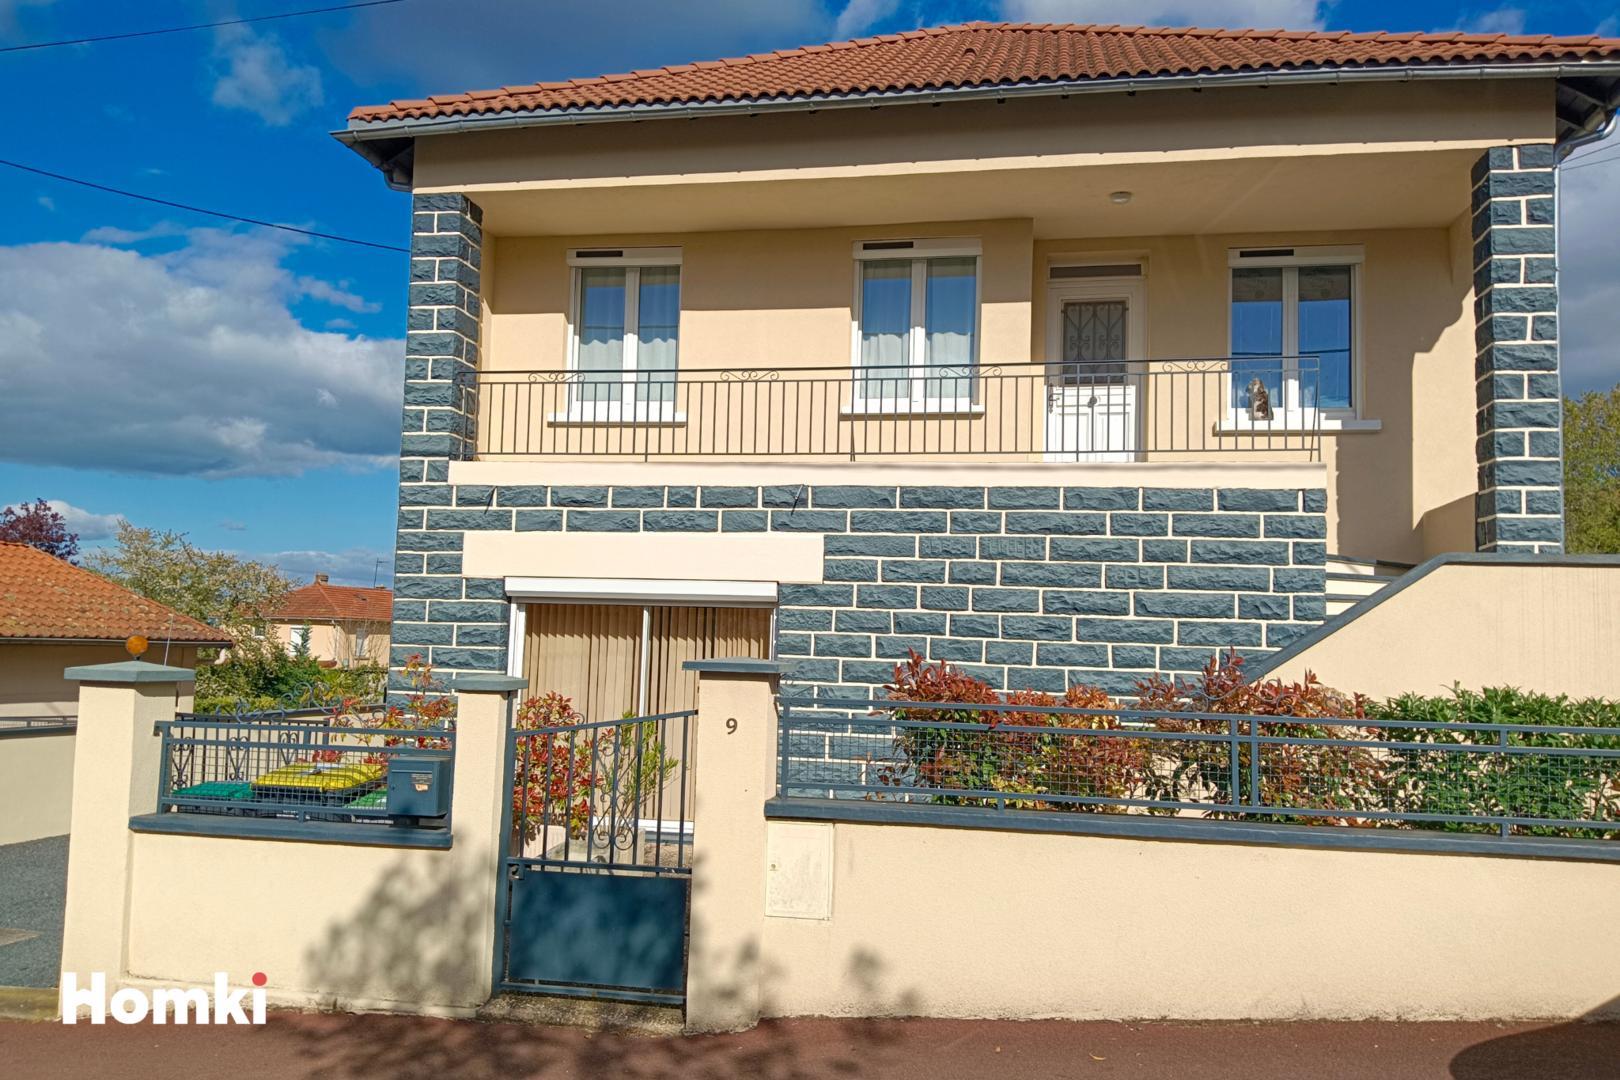 Homki - Vente Maison/villa  de 135.0 m² à Riom 63200